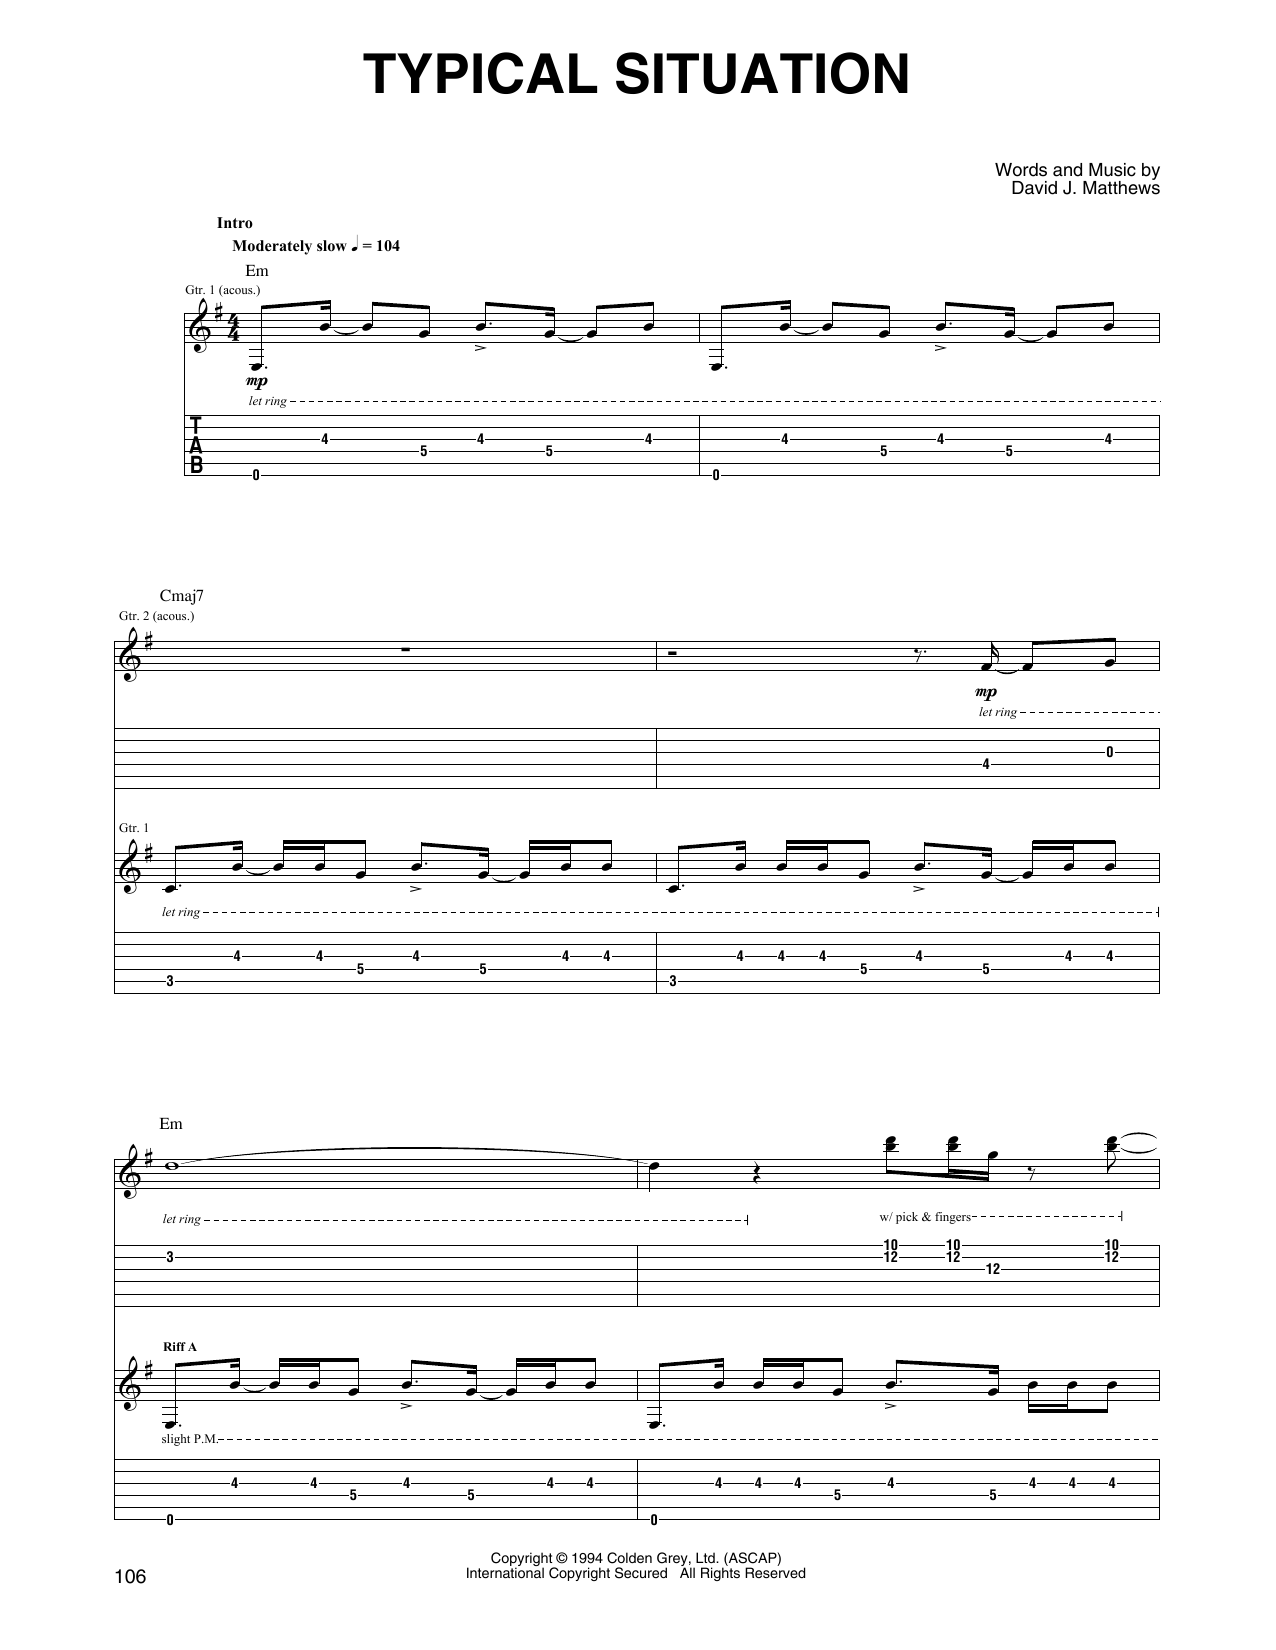 Dave Matthews & Tim Reynolds Typical Situation Sheet Music Notes & Chords for Guitar Tab - Download or Print PDF